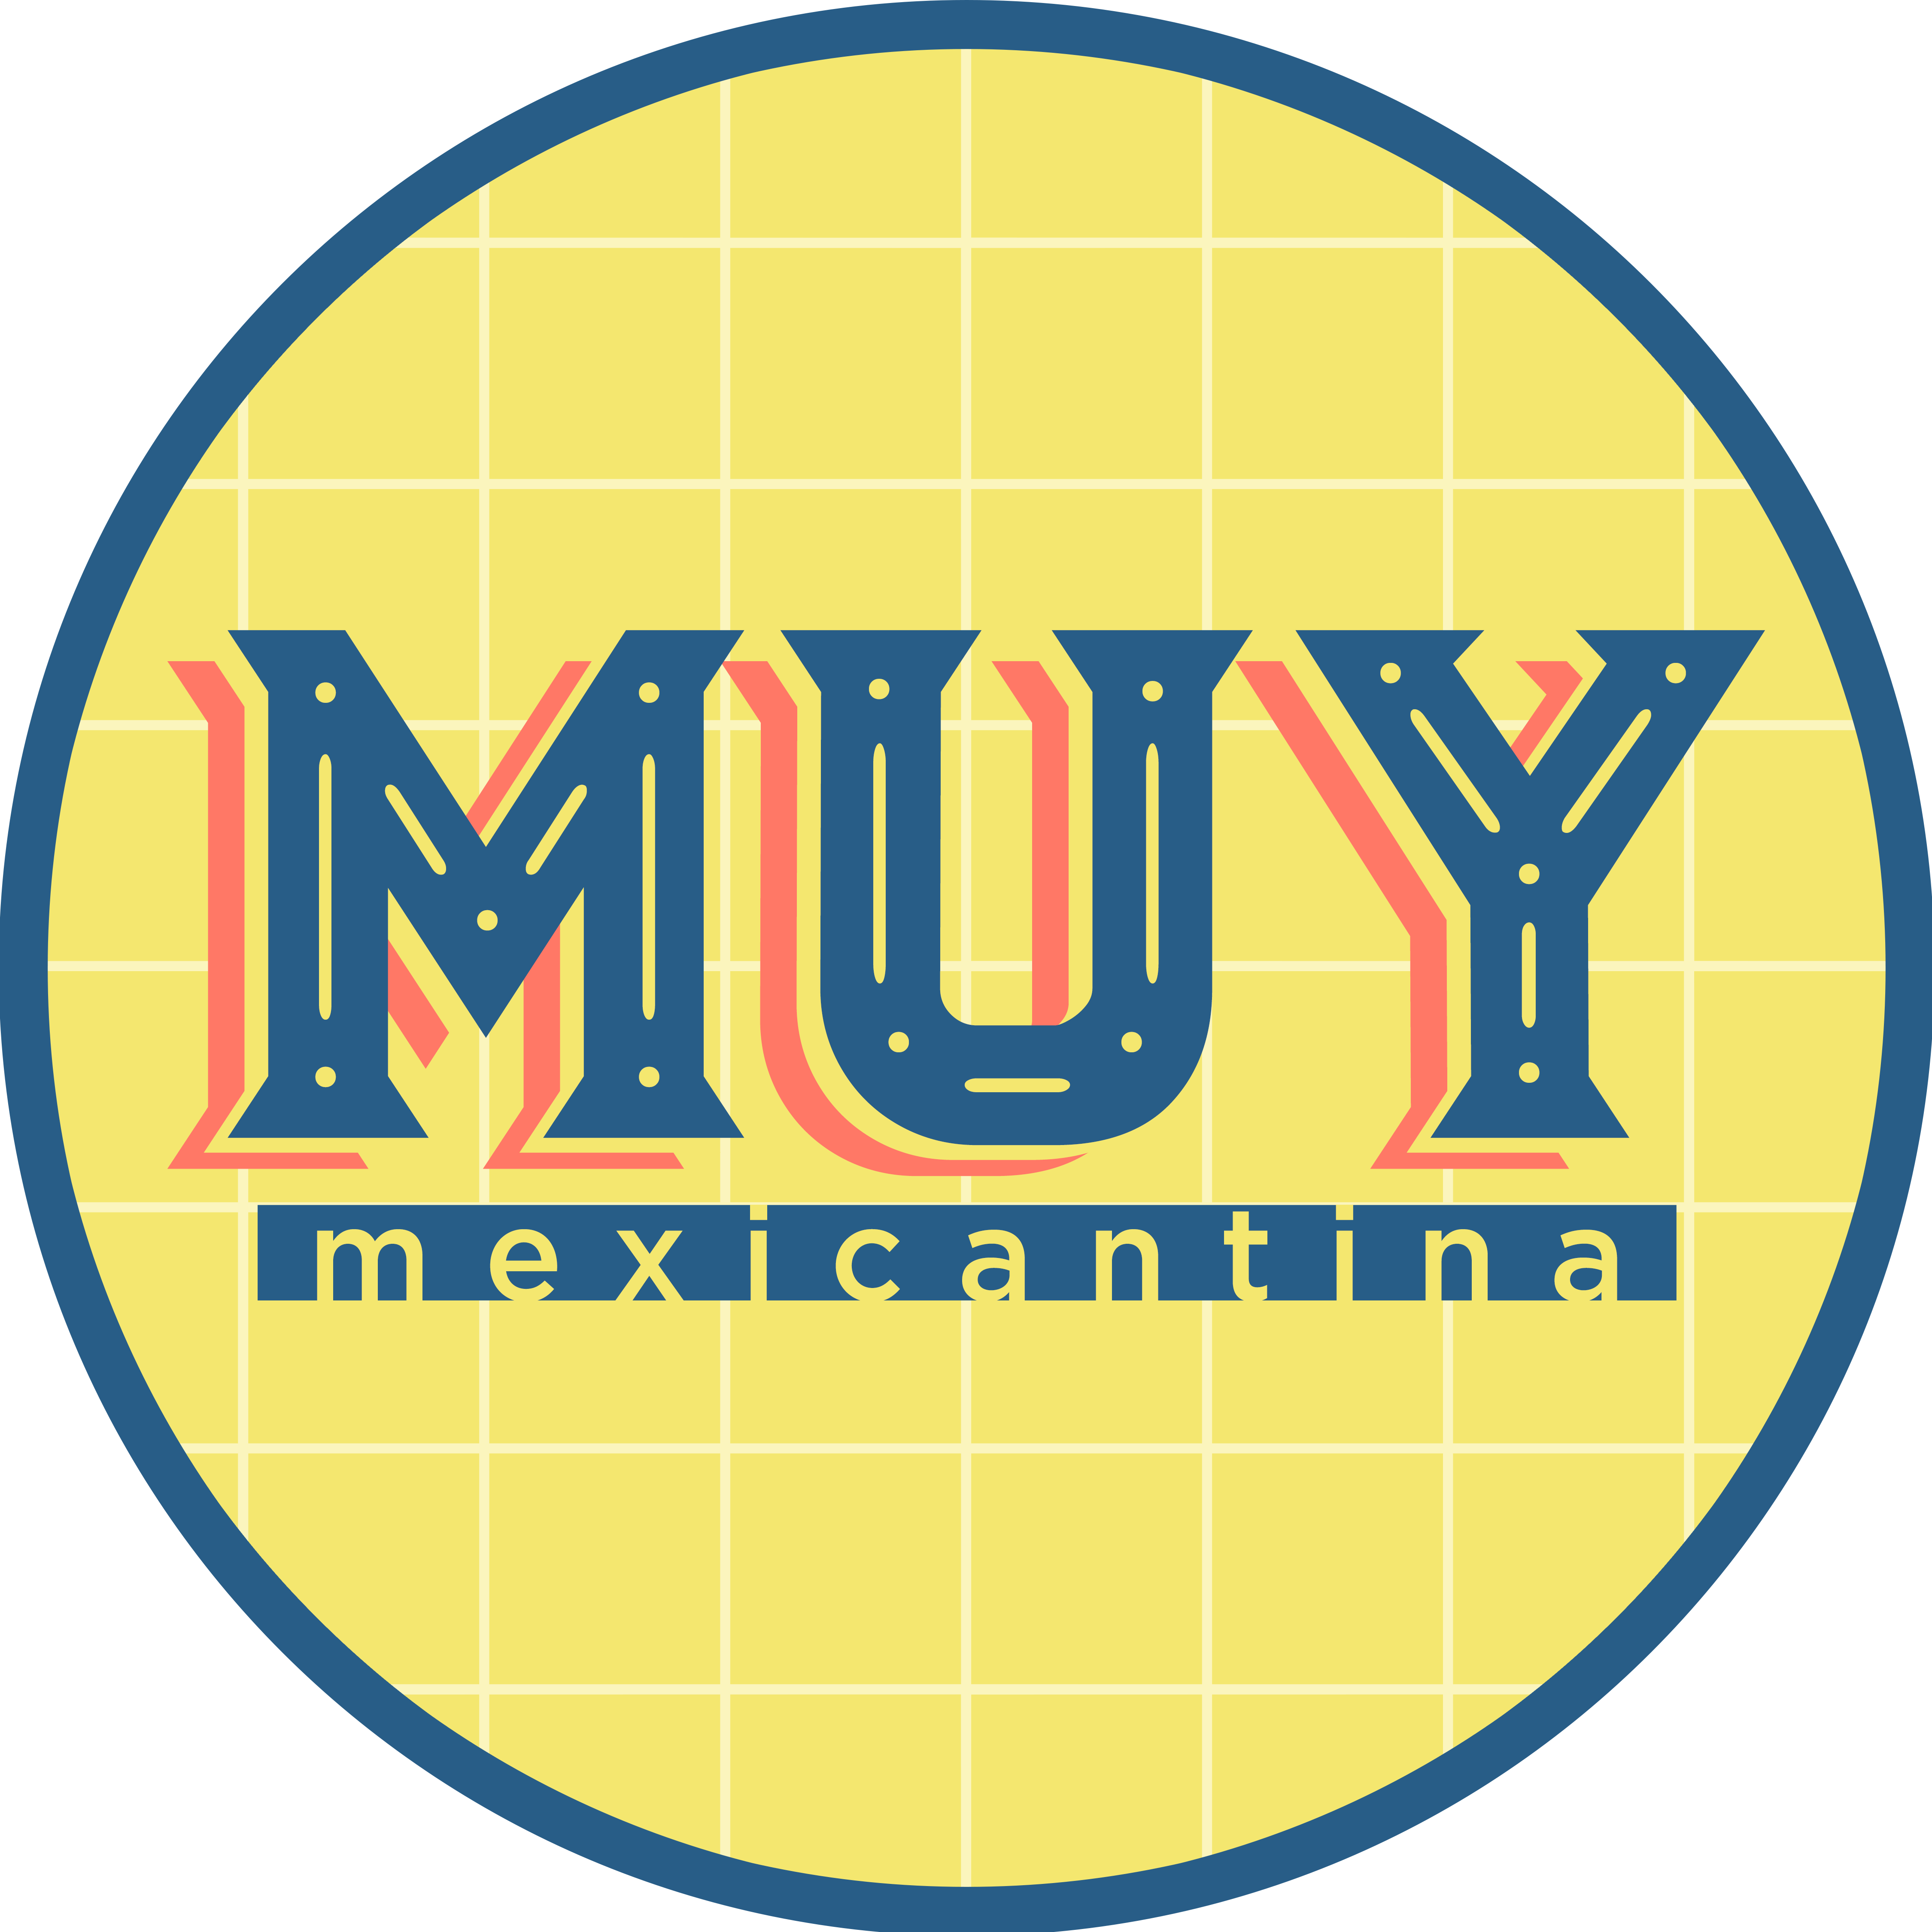 Muy Mexicantina logo